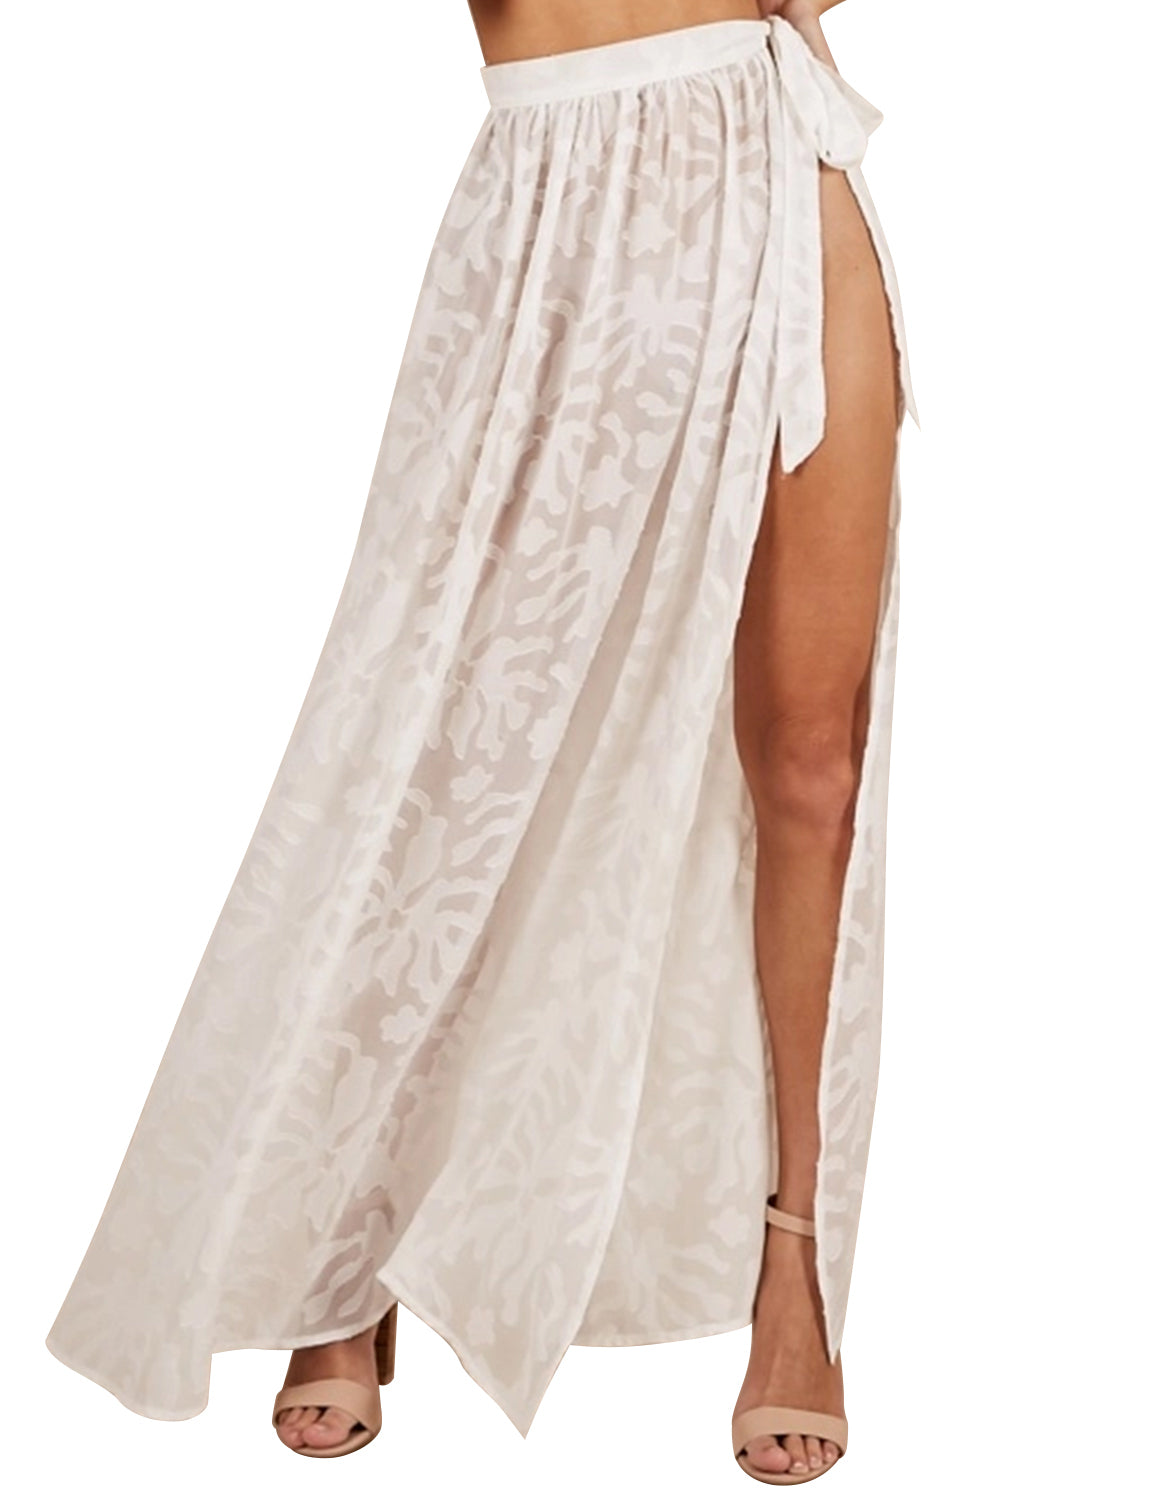 【Size XS】Gorgeous Beauty Silk Lace Long Wrap Skirt